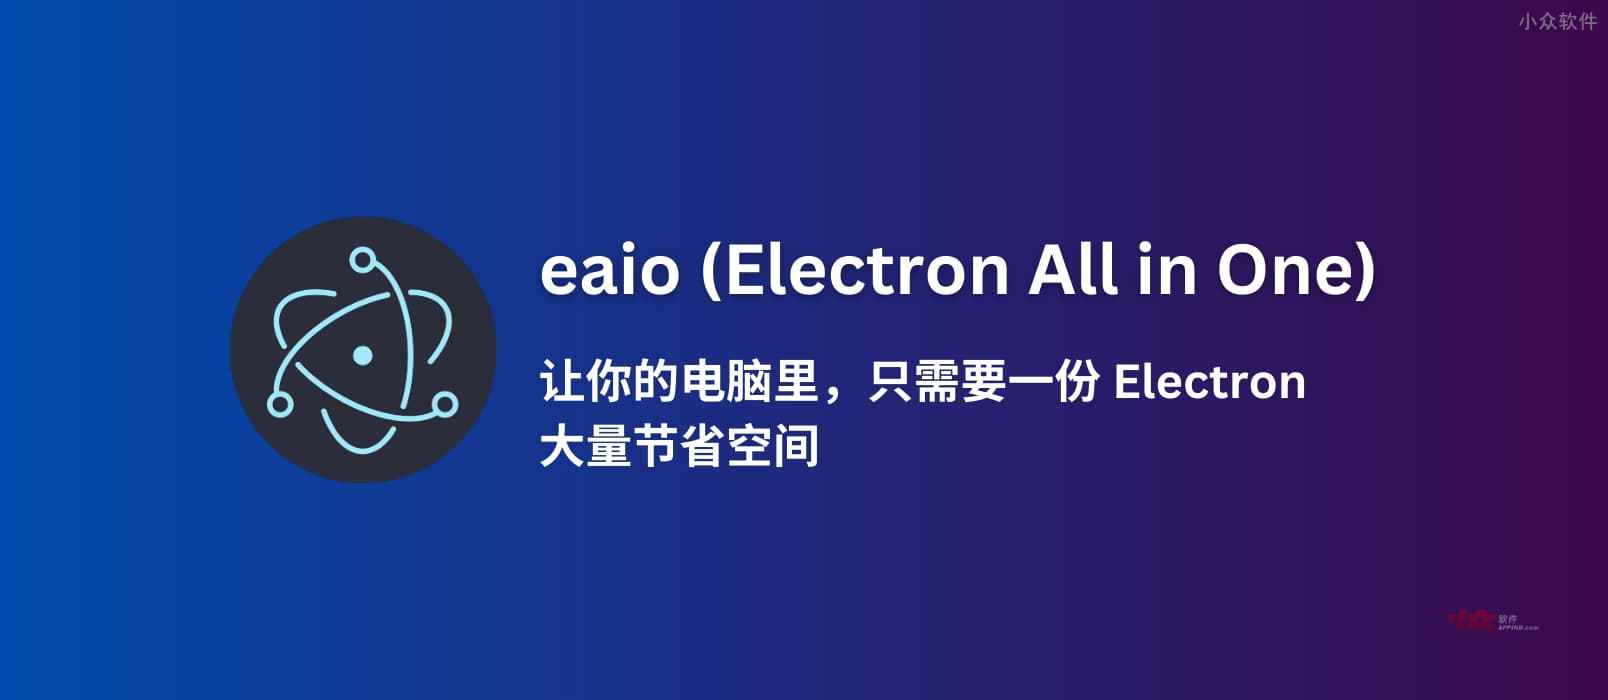 eaio (Electron All in One) - 让你的电脑里，只需要一份 Electron，大量节省空间。